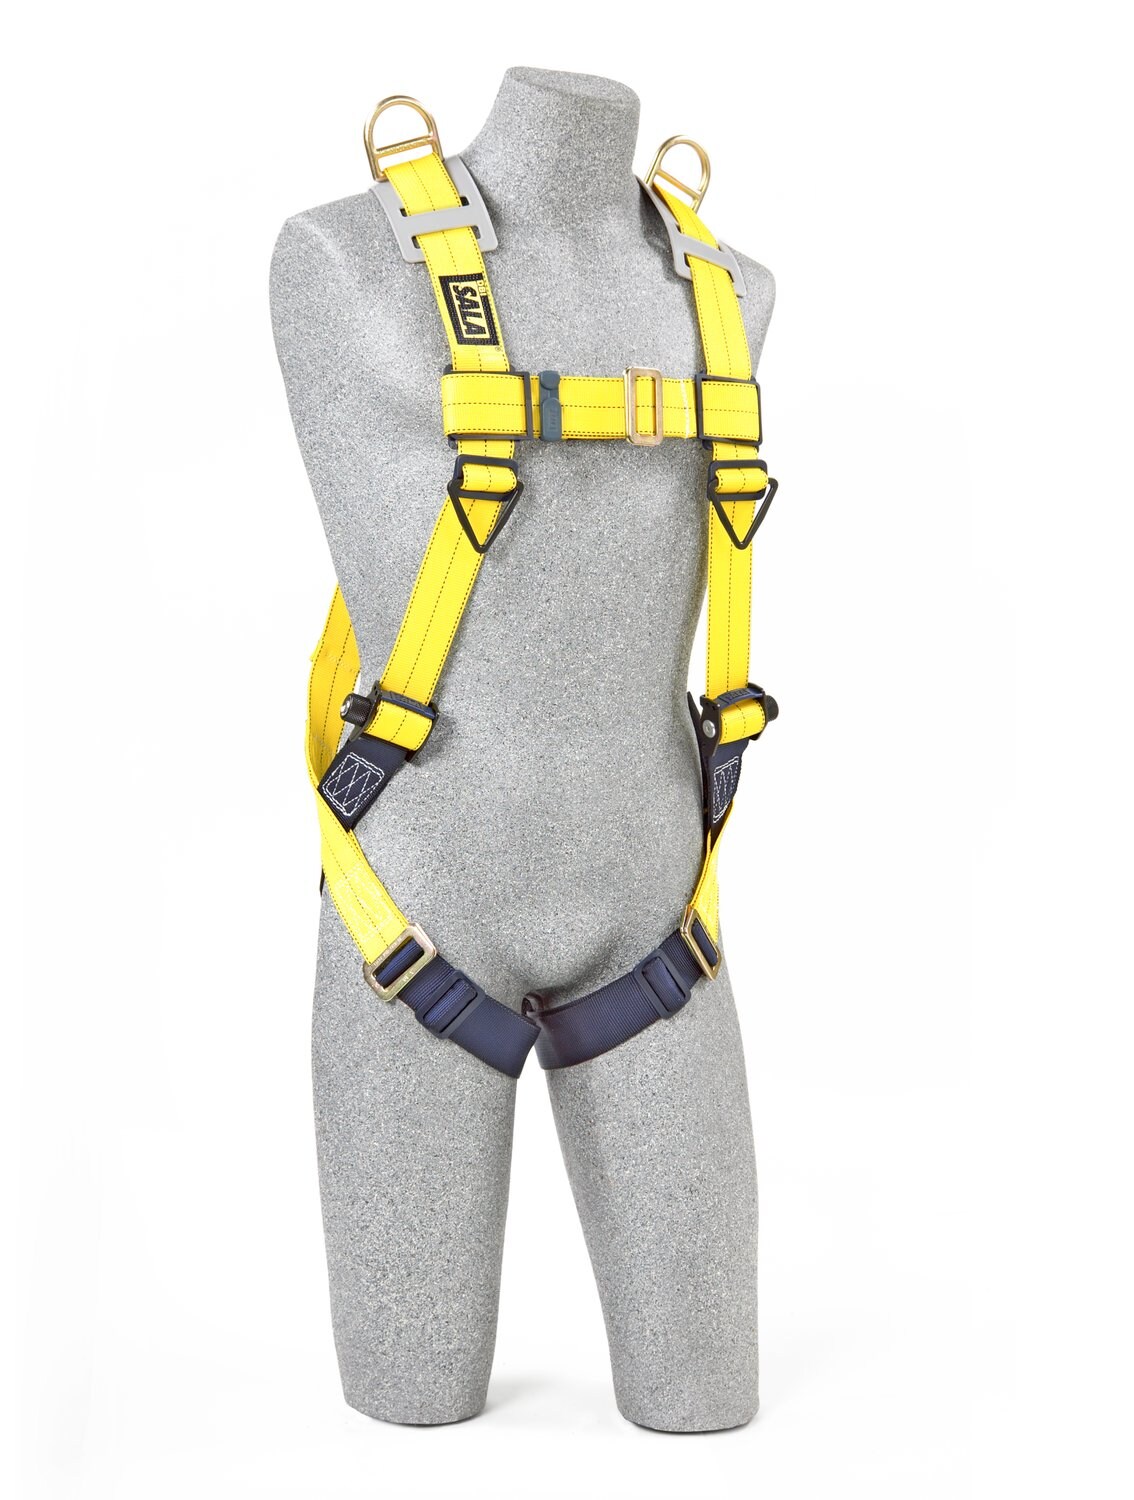 7012815680 - 3M DBI-SALA Delta Vest Retrieval Safety Harness 1109107, Small